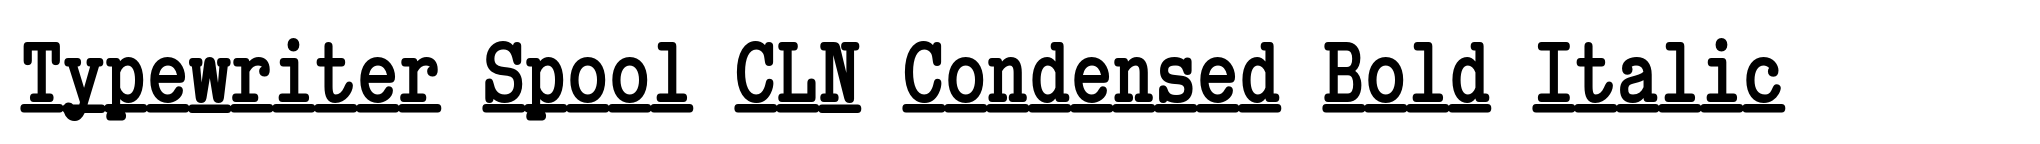 Typewriter Spool CLN Condensed Bold Italic image